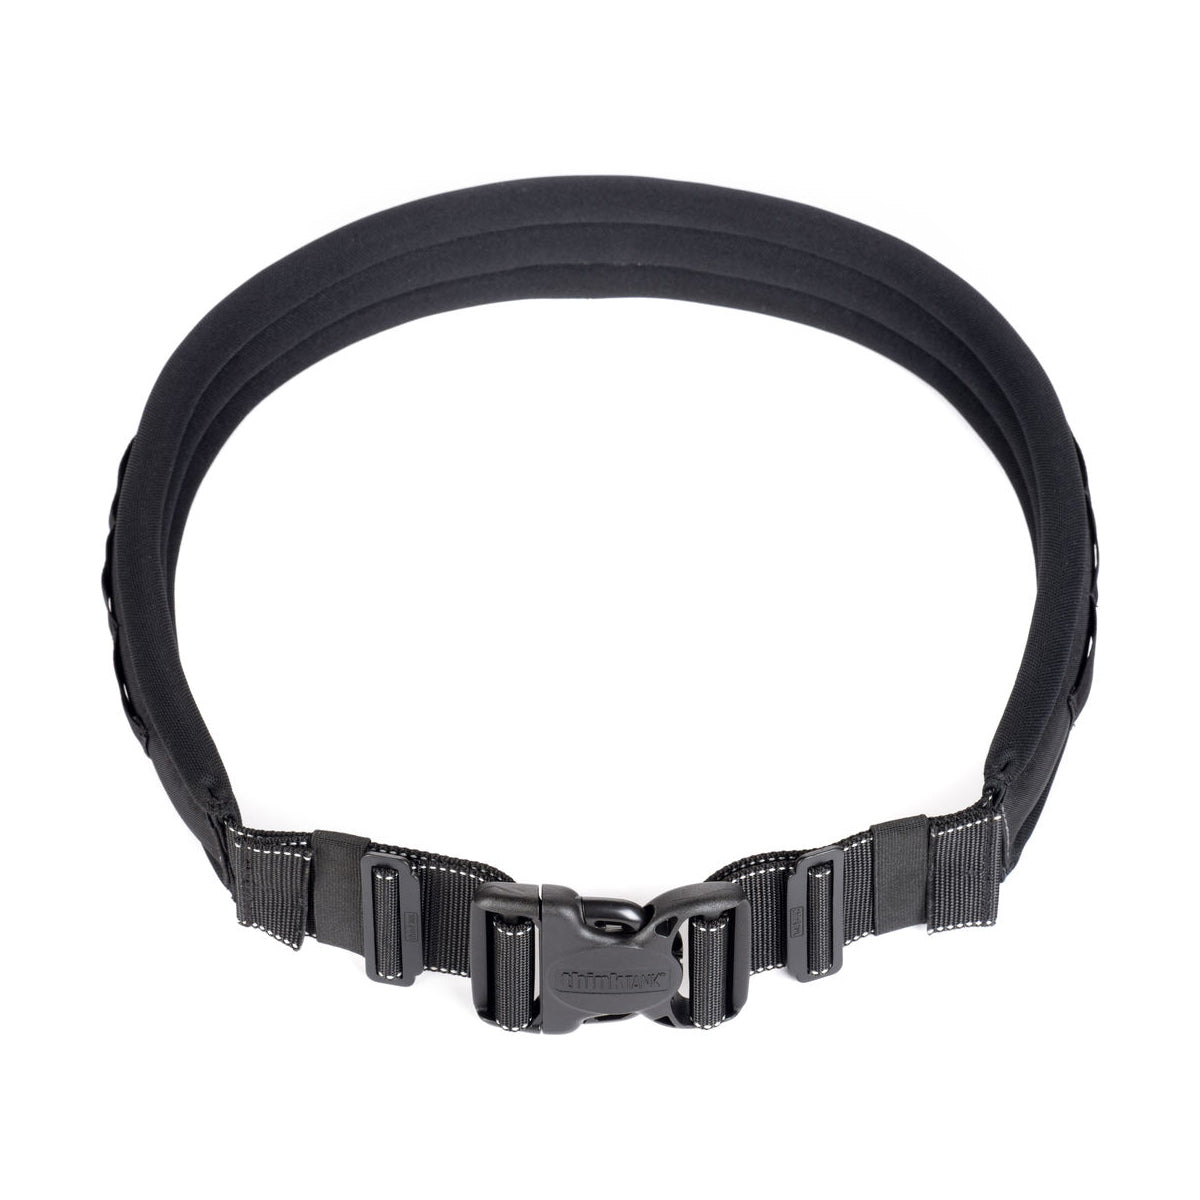 Think Tank Pro Speed Belt V3.0 Camera Bag Waist Belt (L-XL)